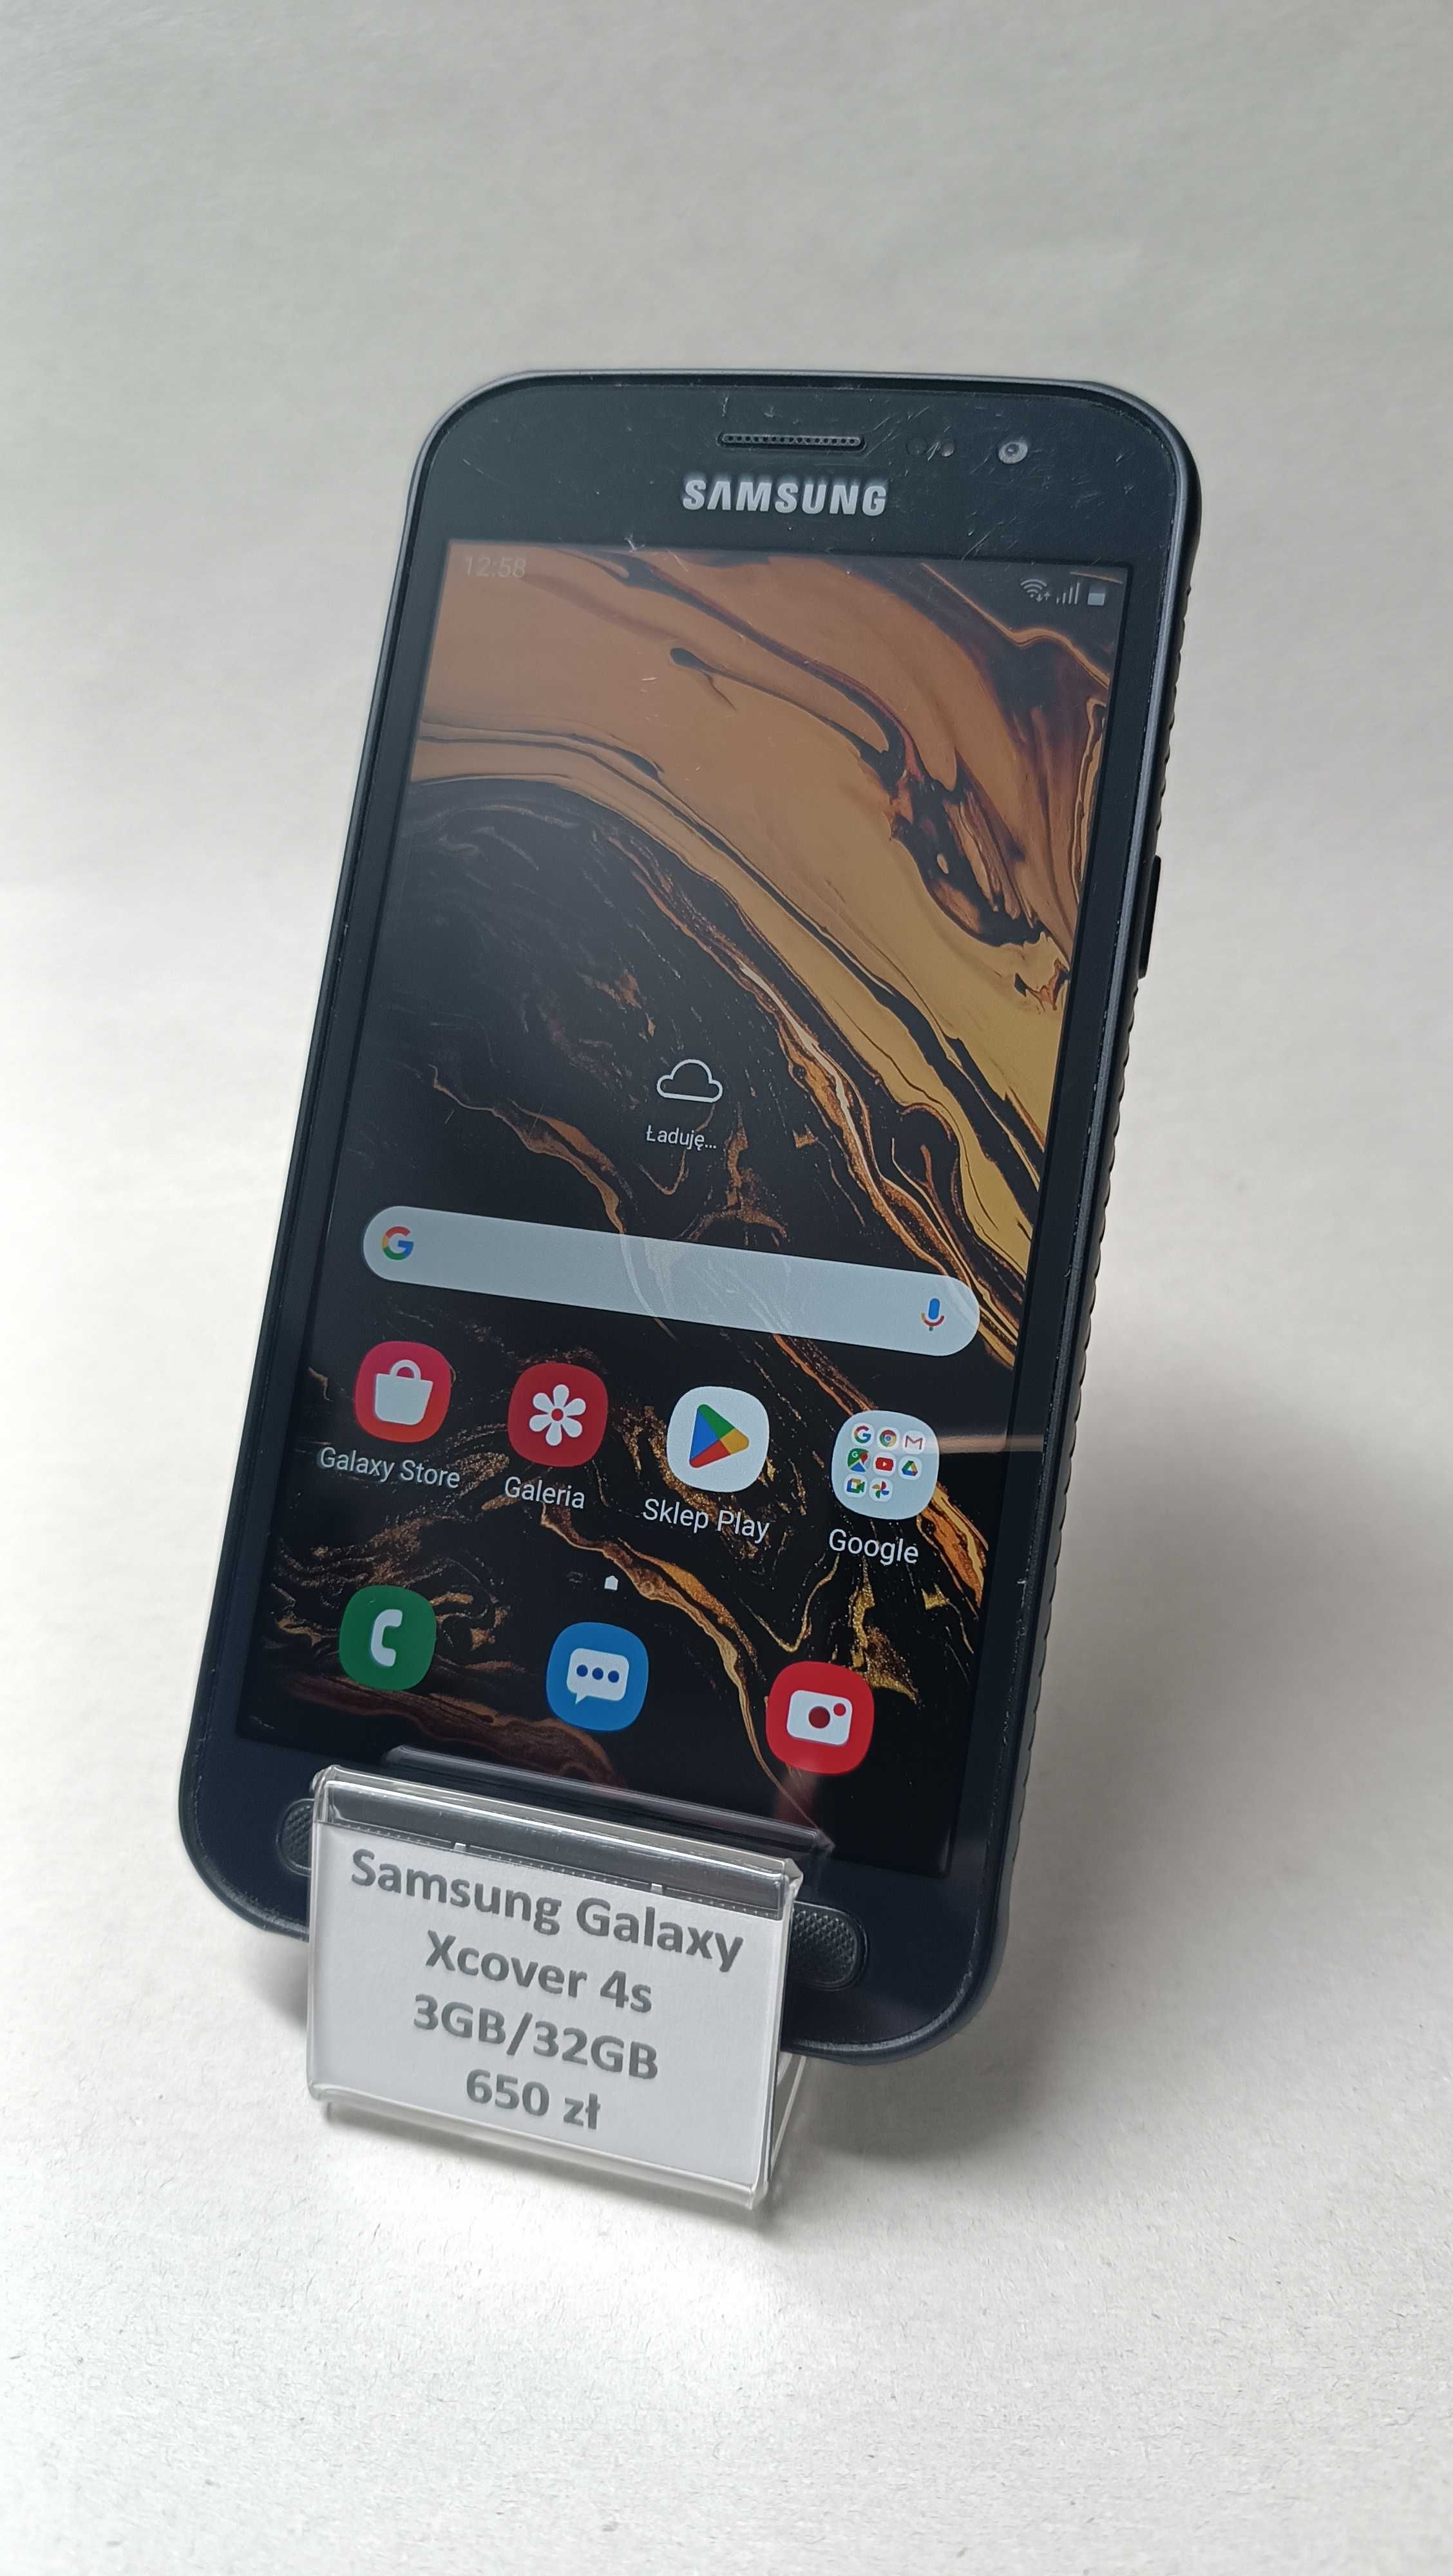 Telefon Samsung Xcover 4s 3GB/32GB Gwarancja!